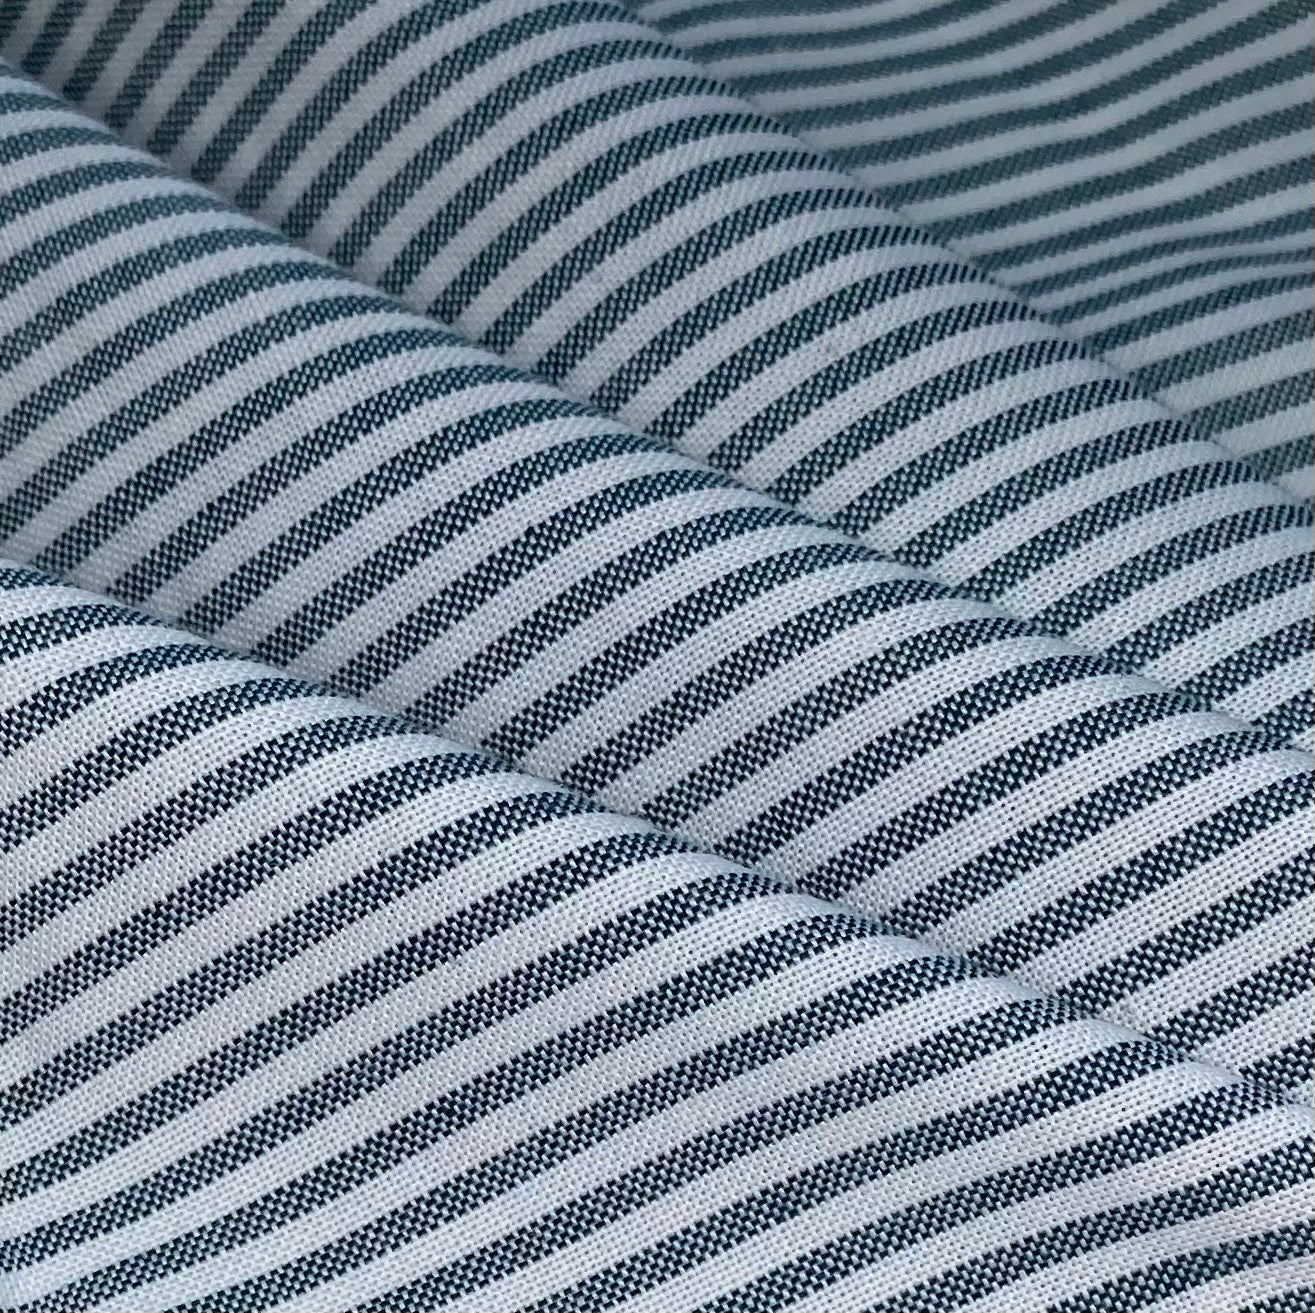 Striped Cotton - 62” - White/Green